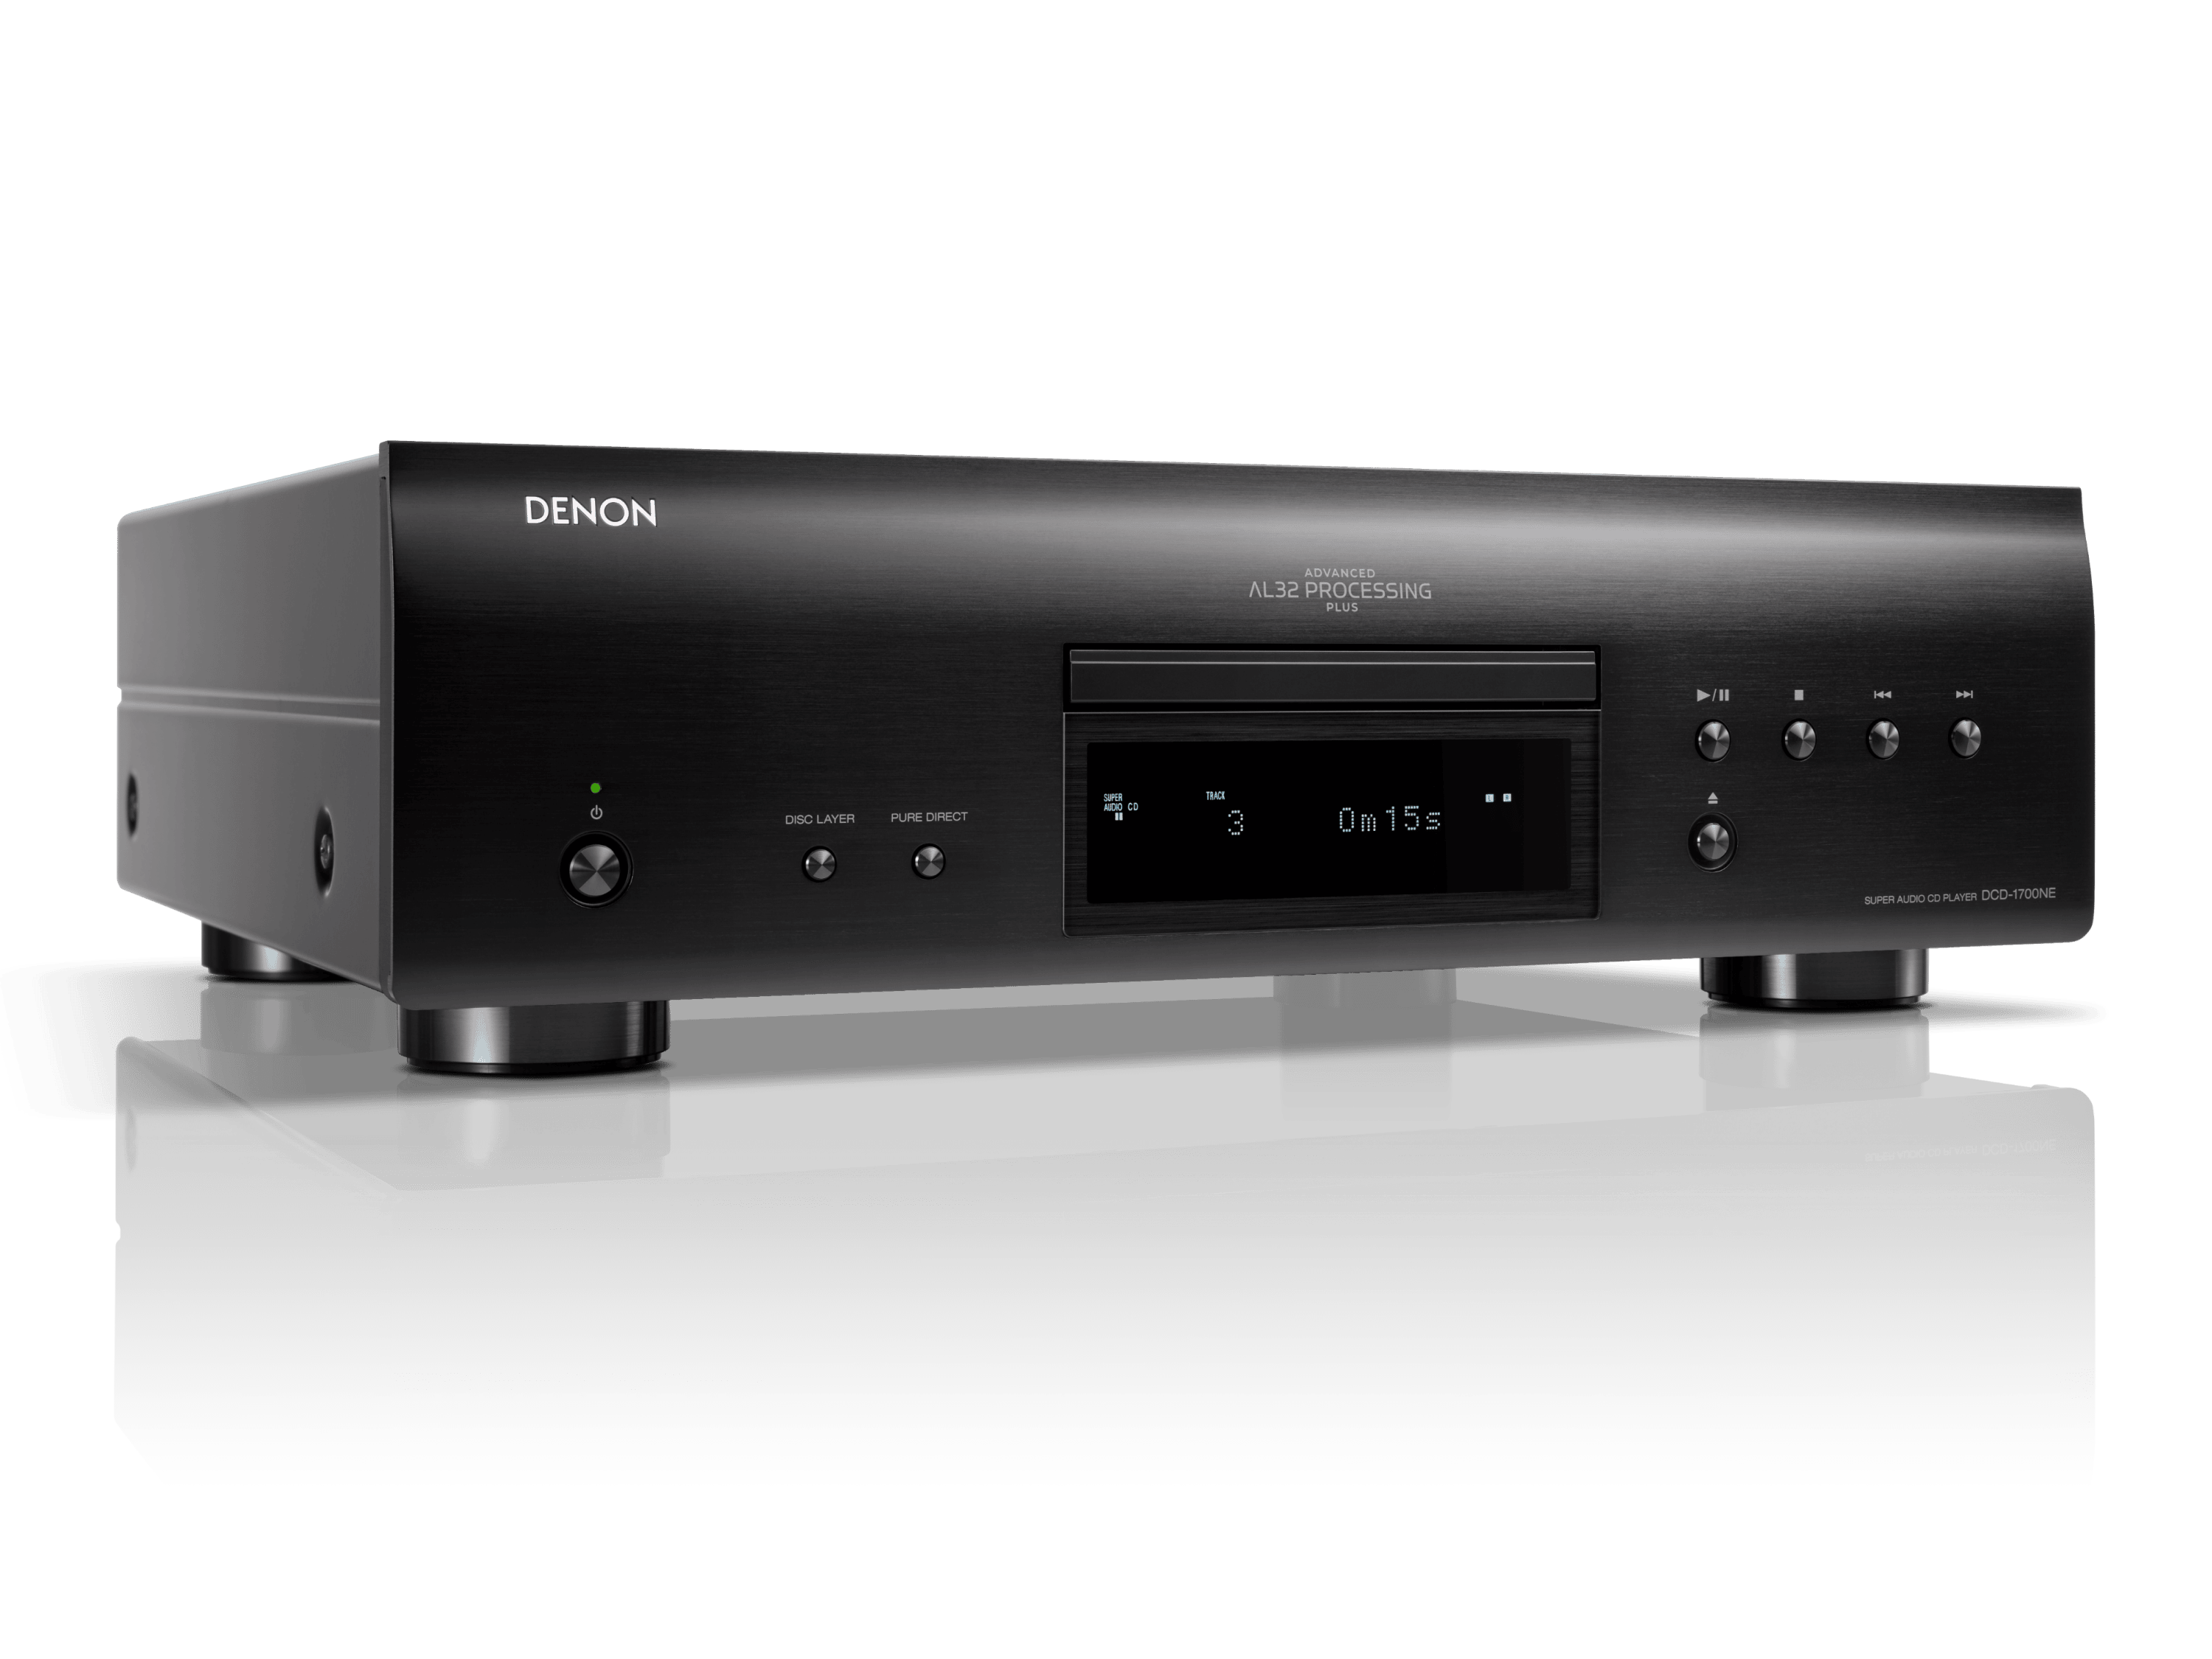 DCD-1700NE - CD/SACD-Player DCD-1700NE mit | AL32 - Denon Plus Processing Advanced Europe